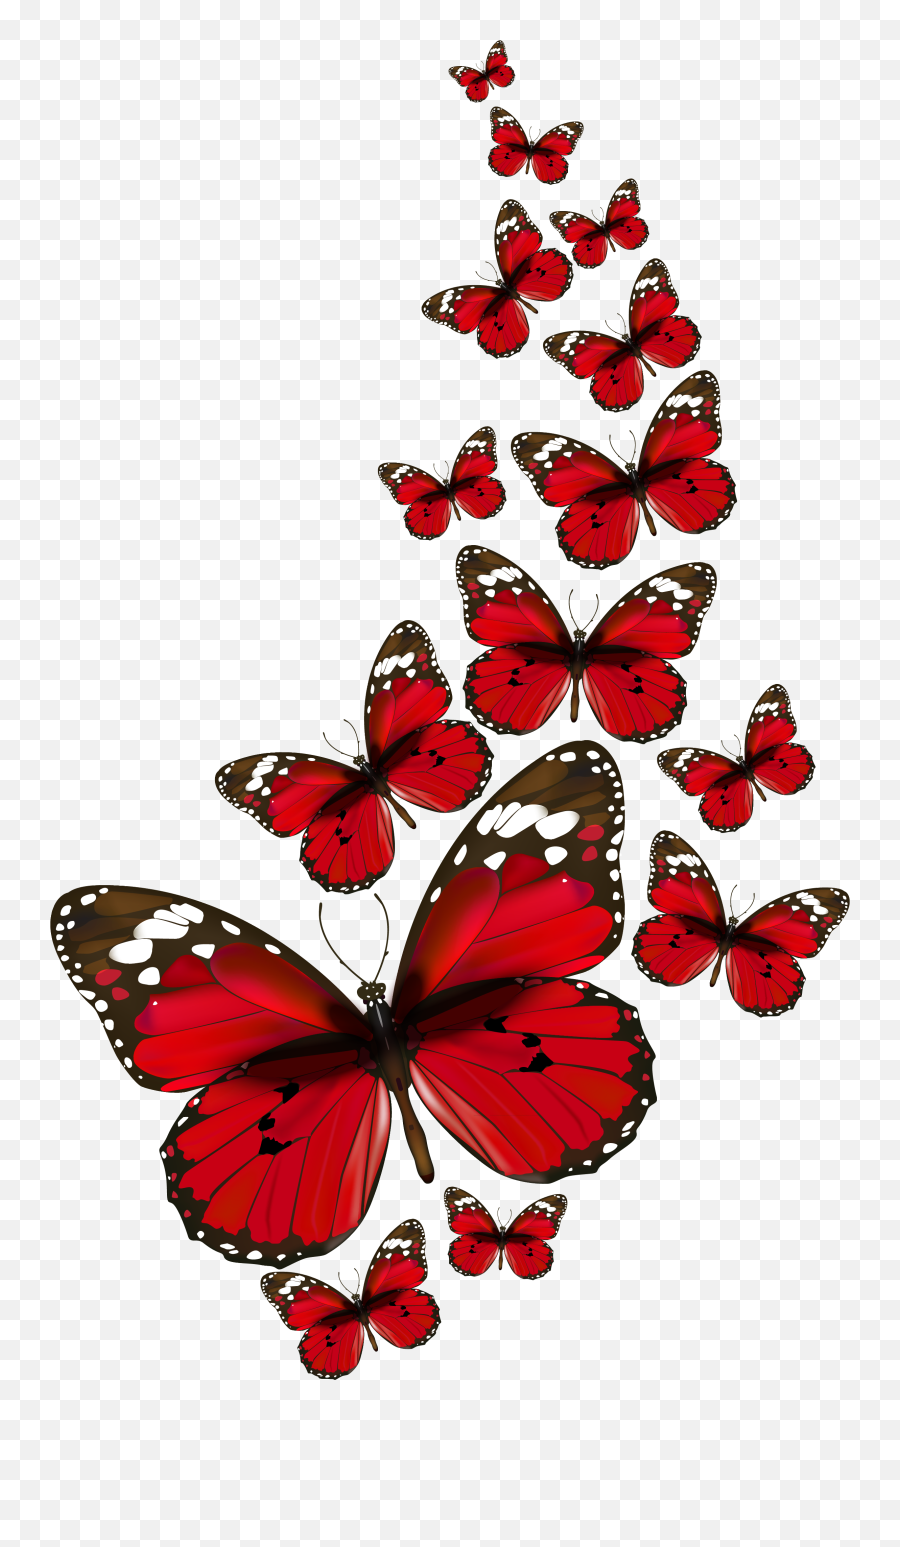 Download Red Butterflies Vector Png Clipart - Transparent ...